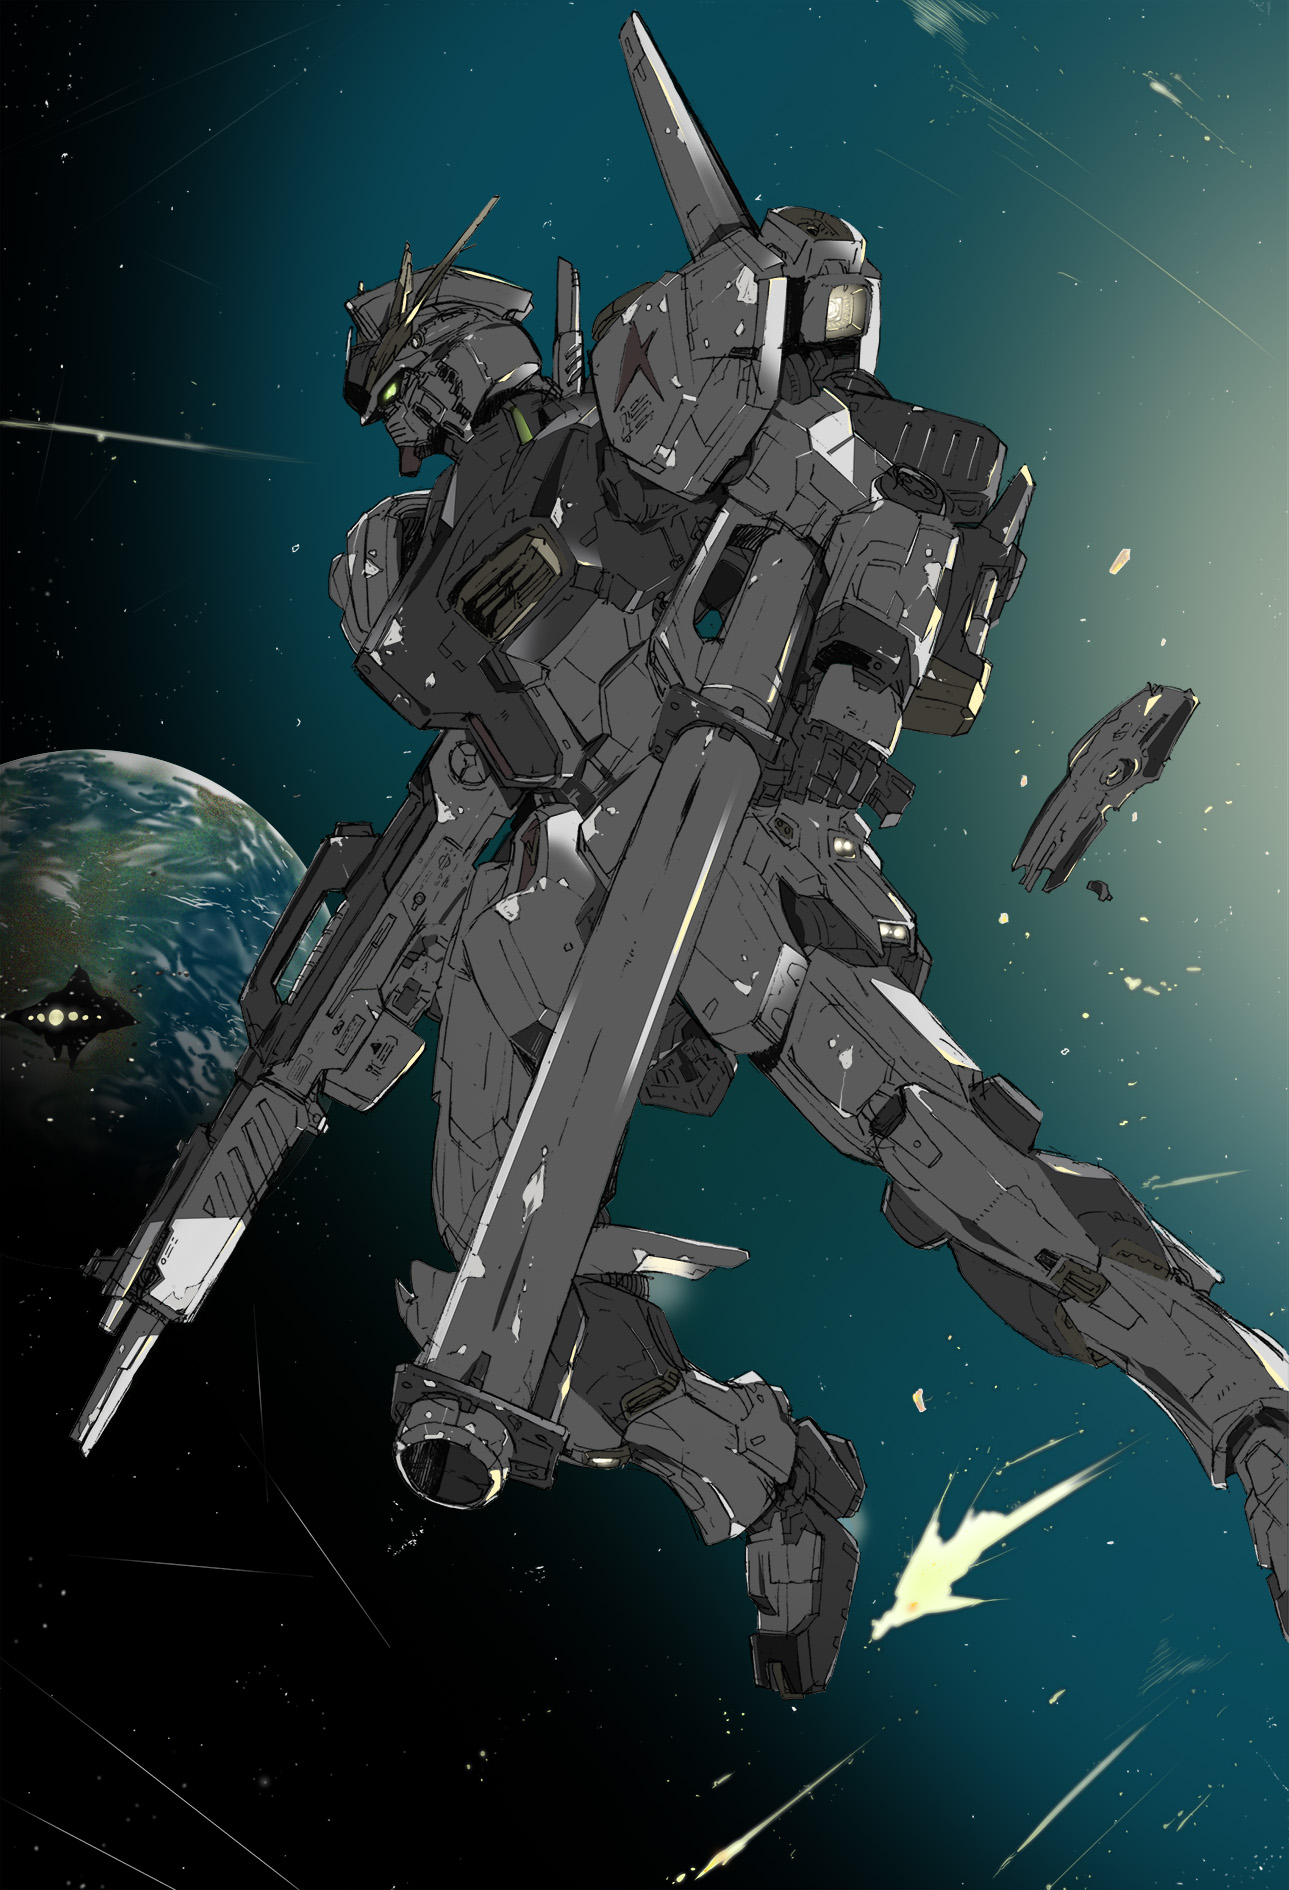 Anime 1289x1890 anime mechs Super Robot Taisen Mobile Suit Gundam Char&#039;s Counterattack Gundam artwork digital art fan art RX-93 v Gundam